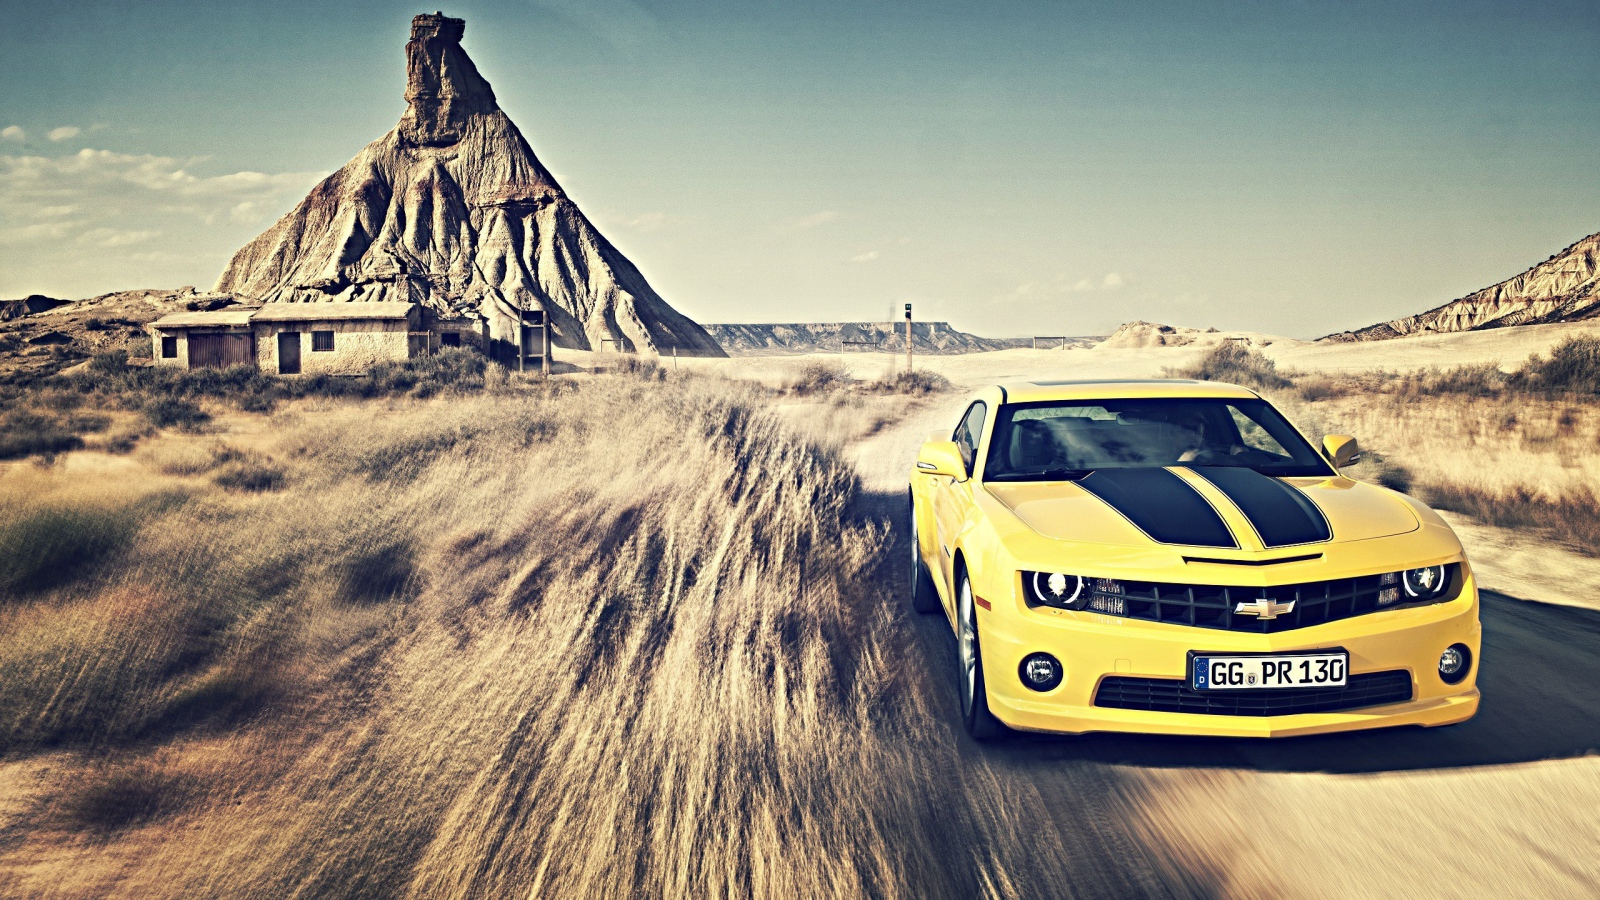 Желтый Chevrolet Camaro мчится по пустыне